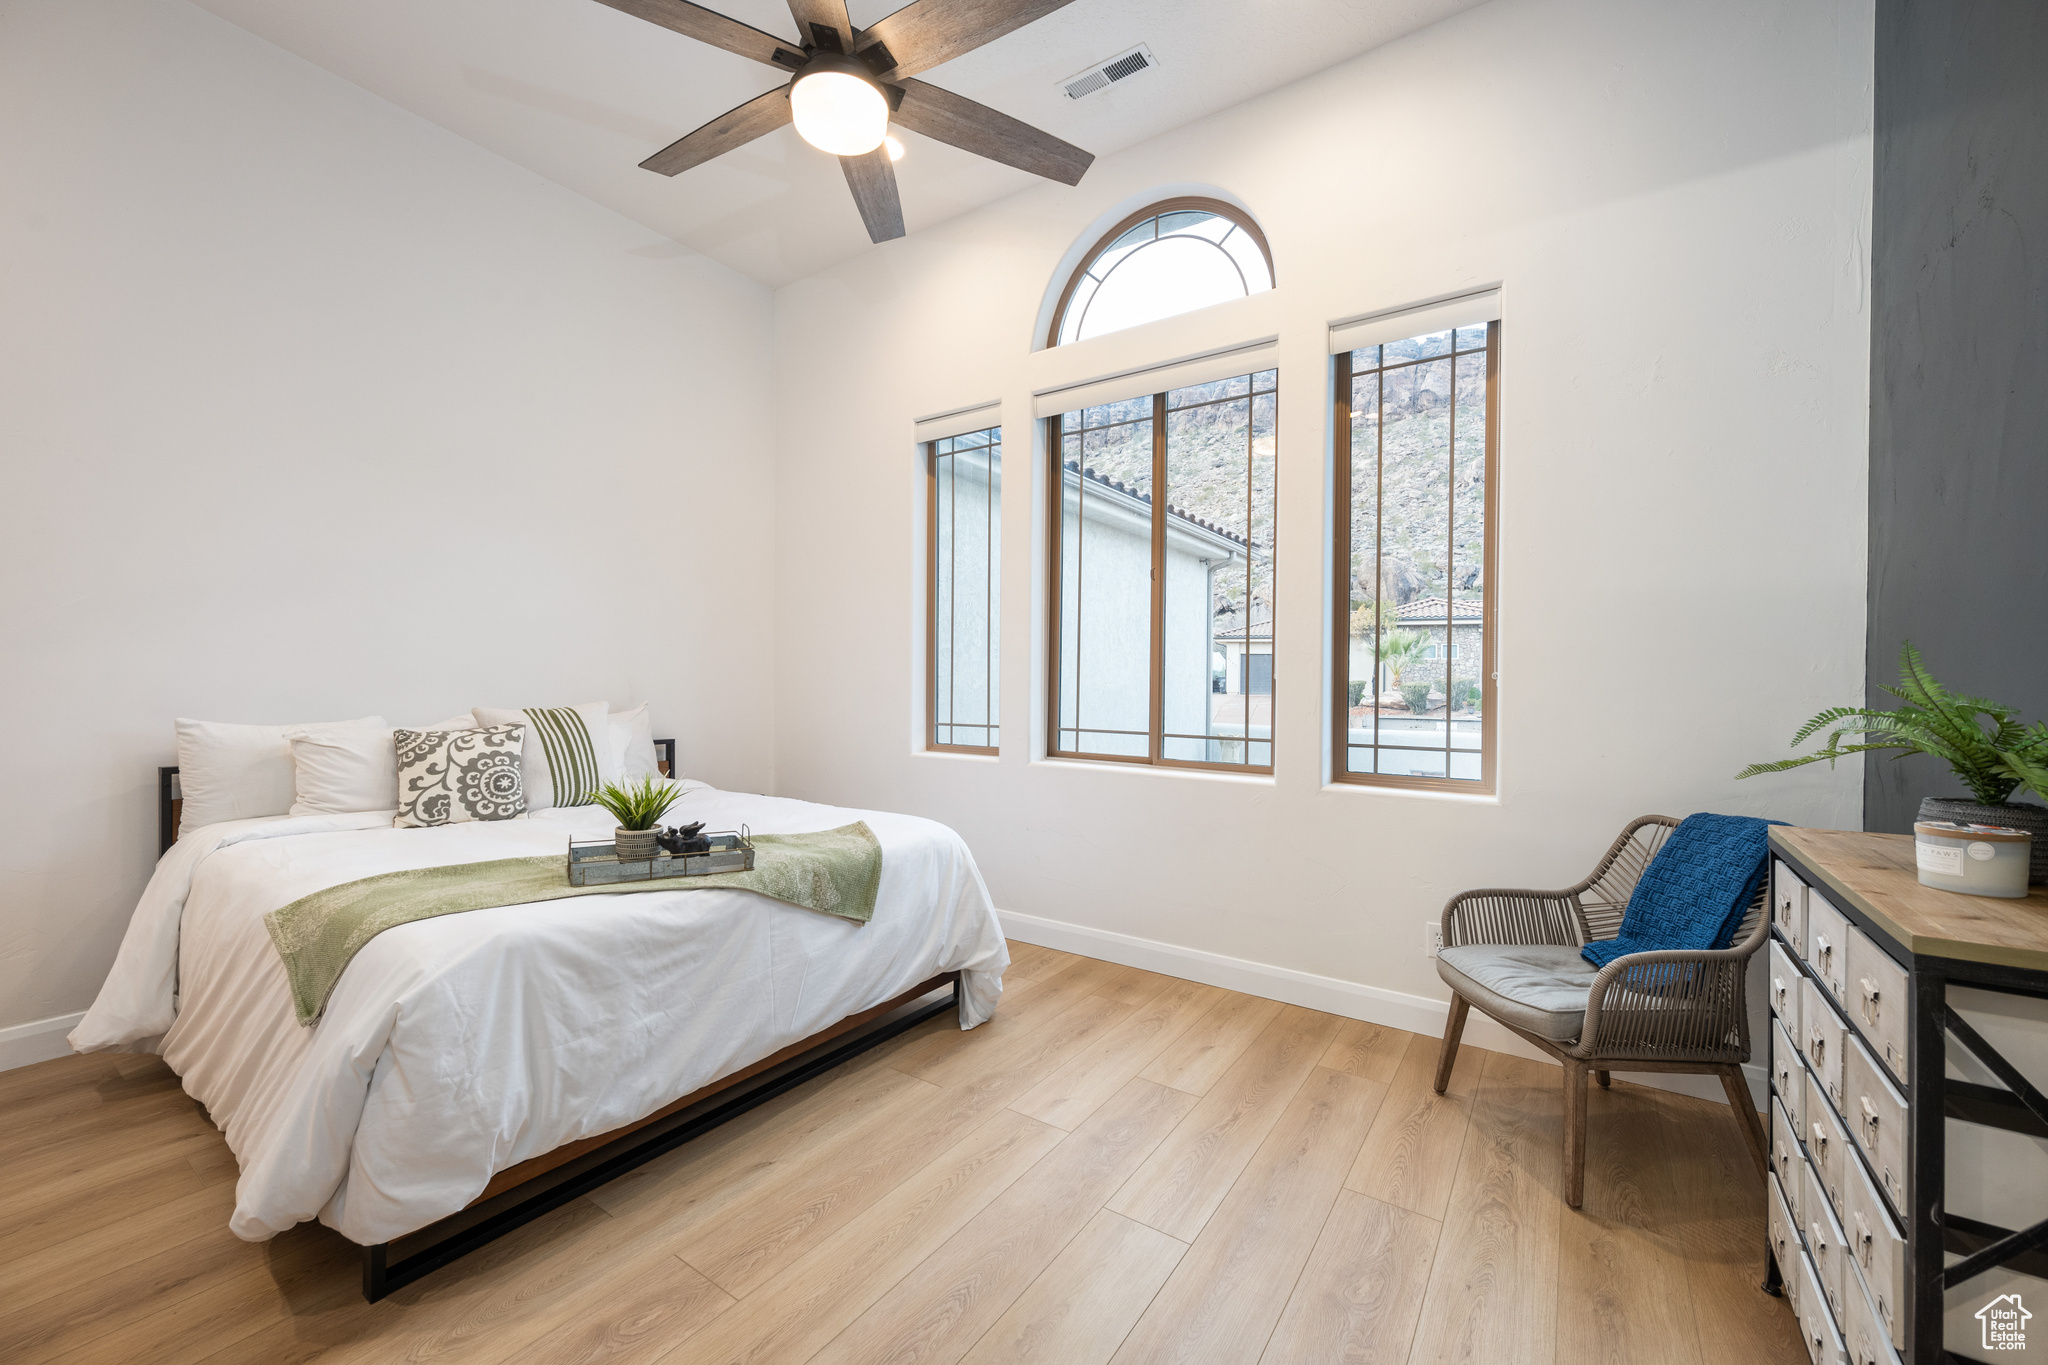 Bedroom featuring light hardwood / wood-style flooring, ceiling fan, and multiple windows